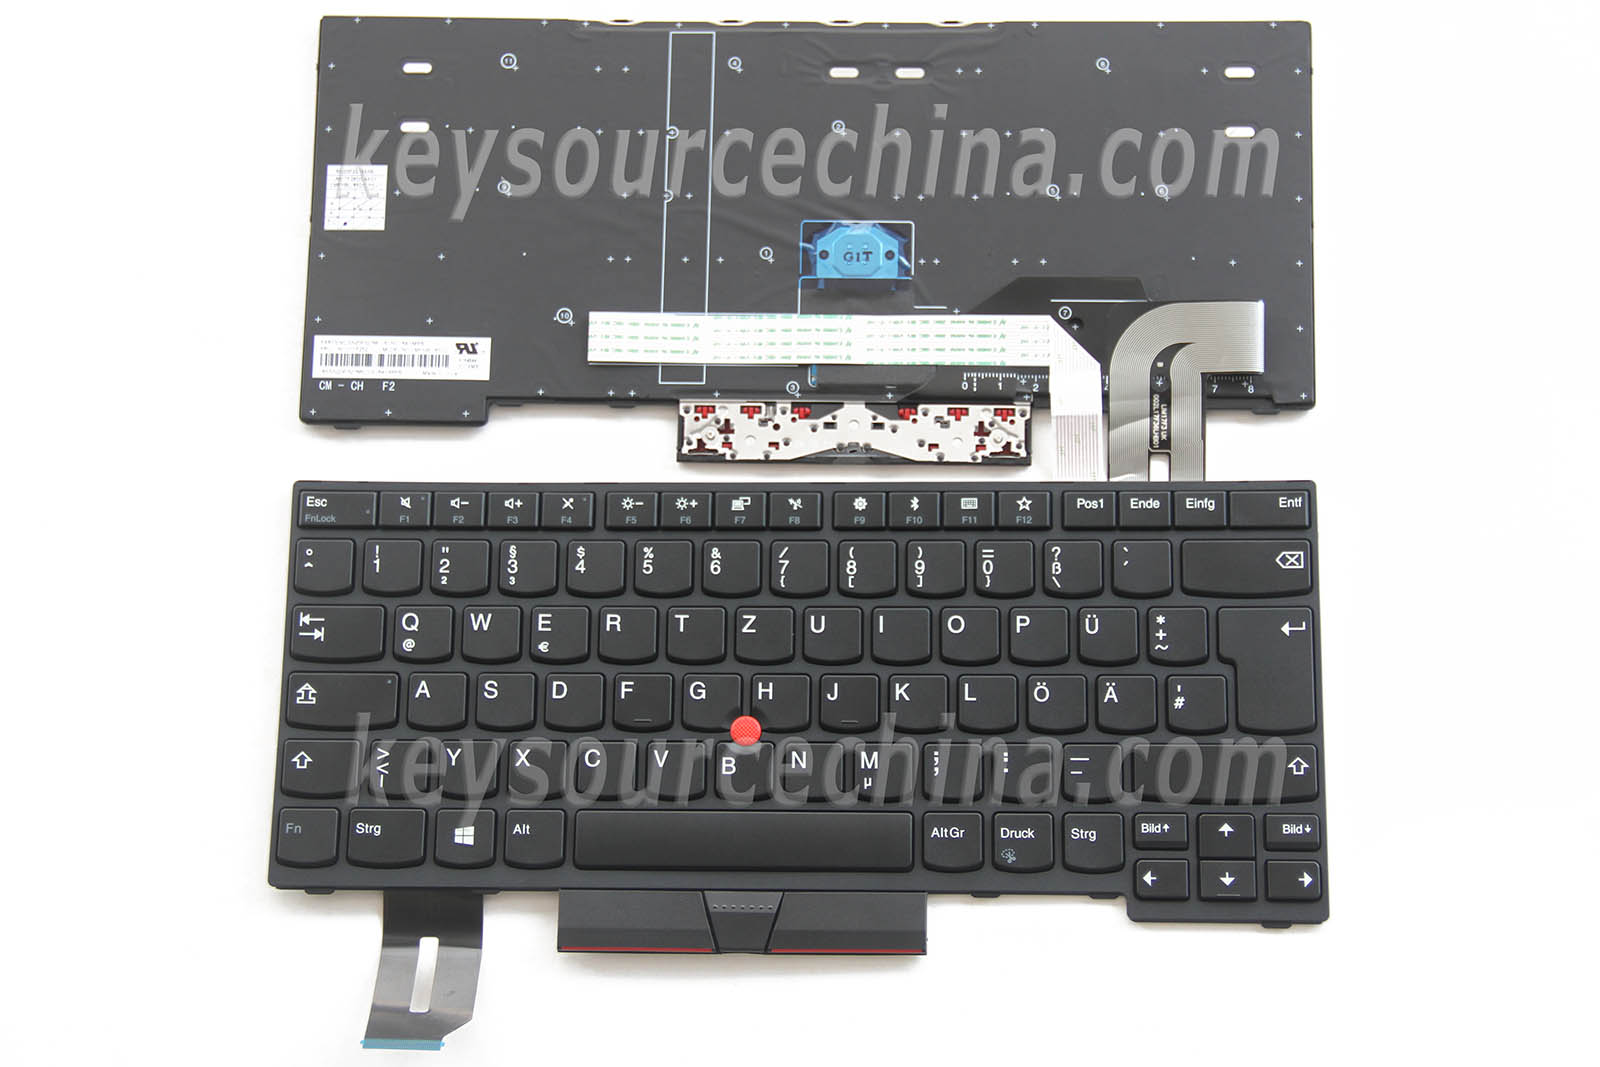 SN20P32766 Originalt Lenovo ThinkPad E480 L480 T480s L380 Yoga Laptop Keyboard German Tastatur Deutsch